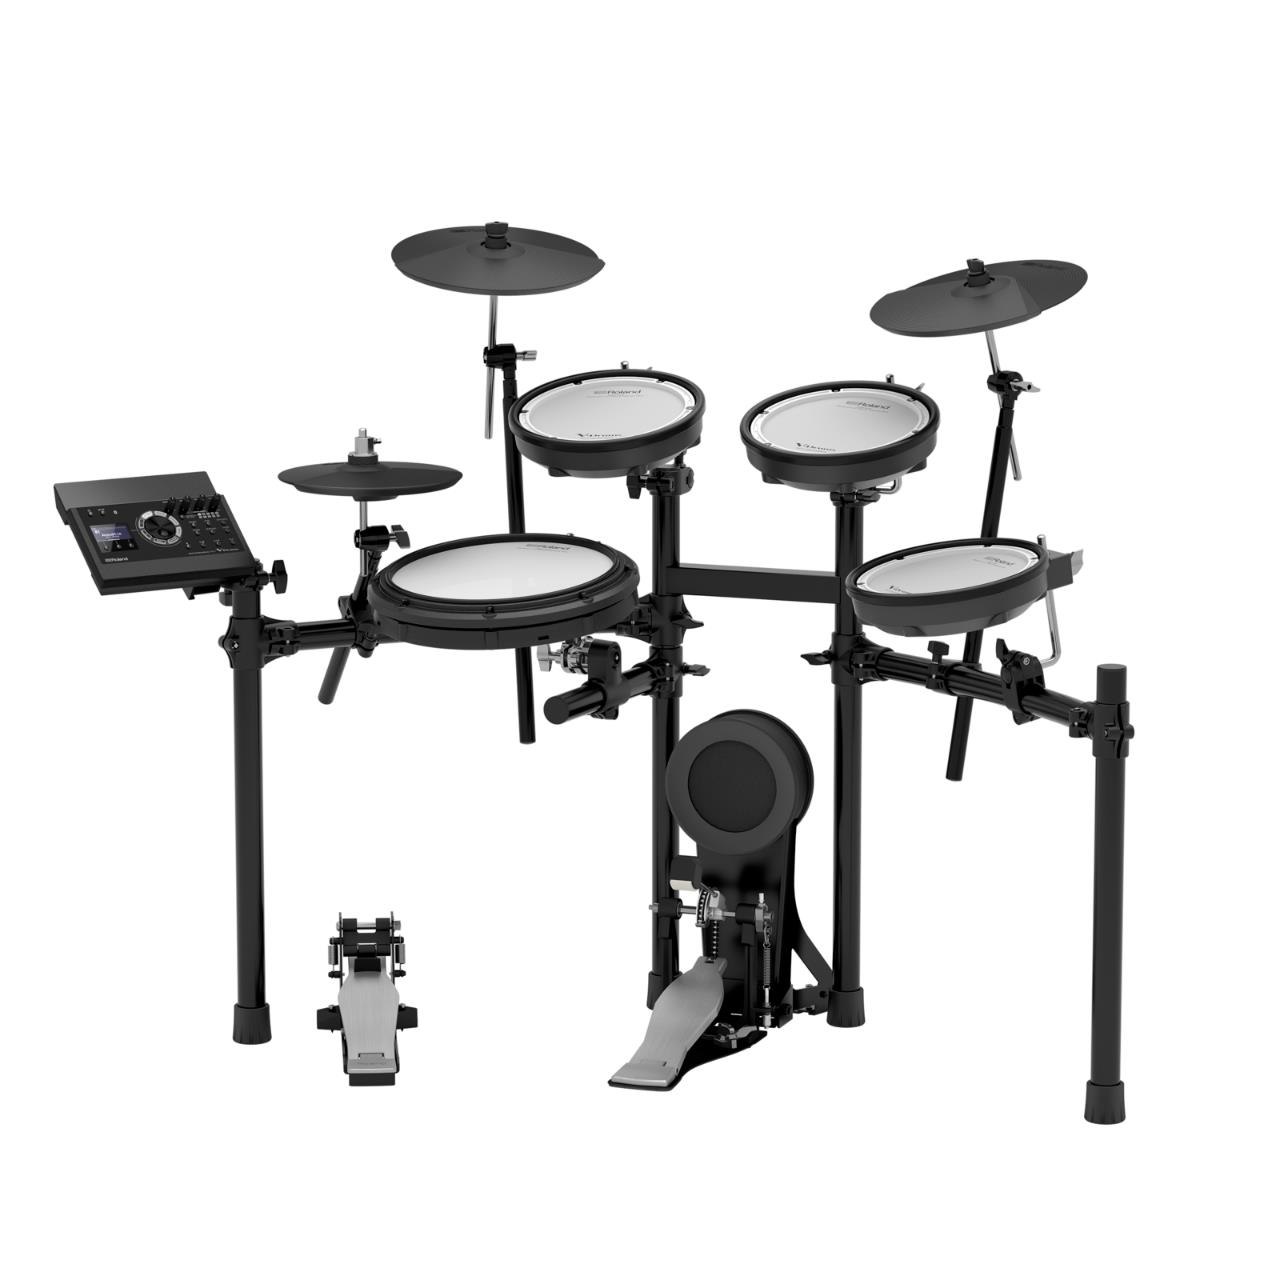  drum,drums,musical instrument,tom tom drum,percussion accessory